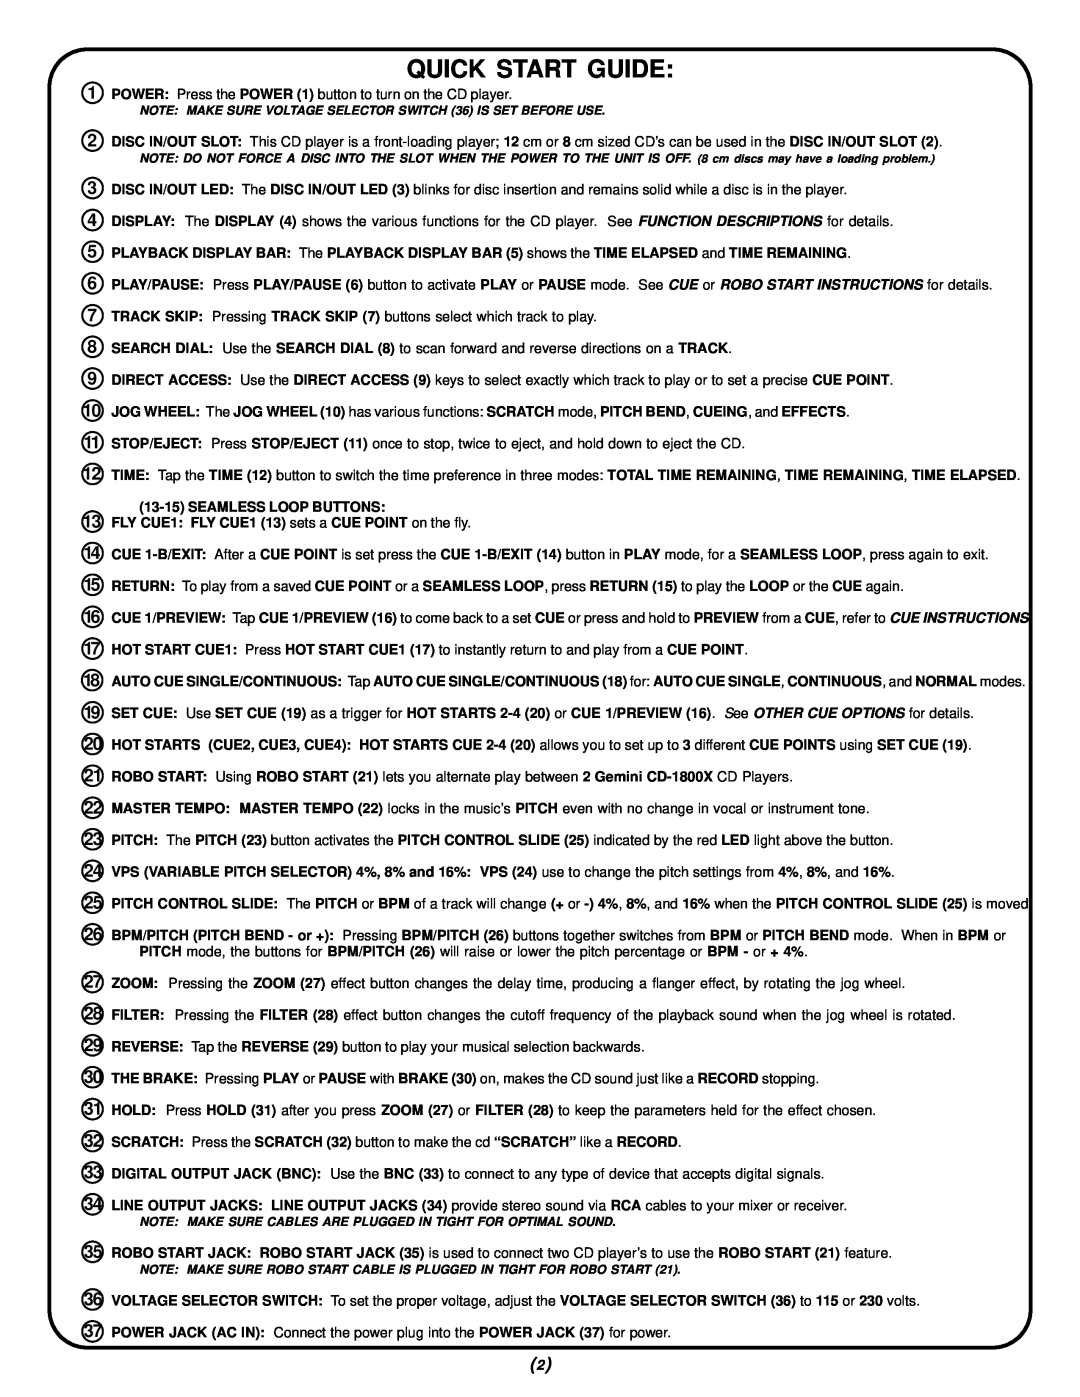 Gemini CD-1800X manual Quick Start Guide, 13-15SEAMLESS LOOP BUTTONS 